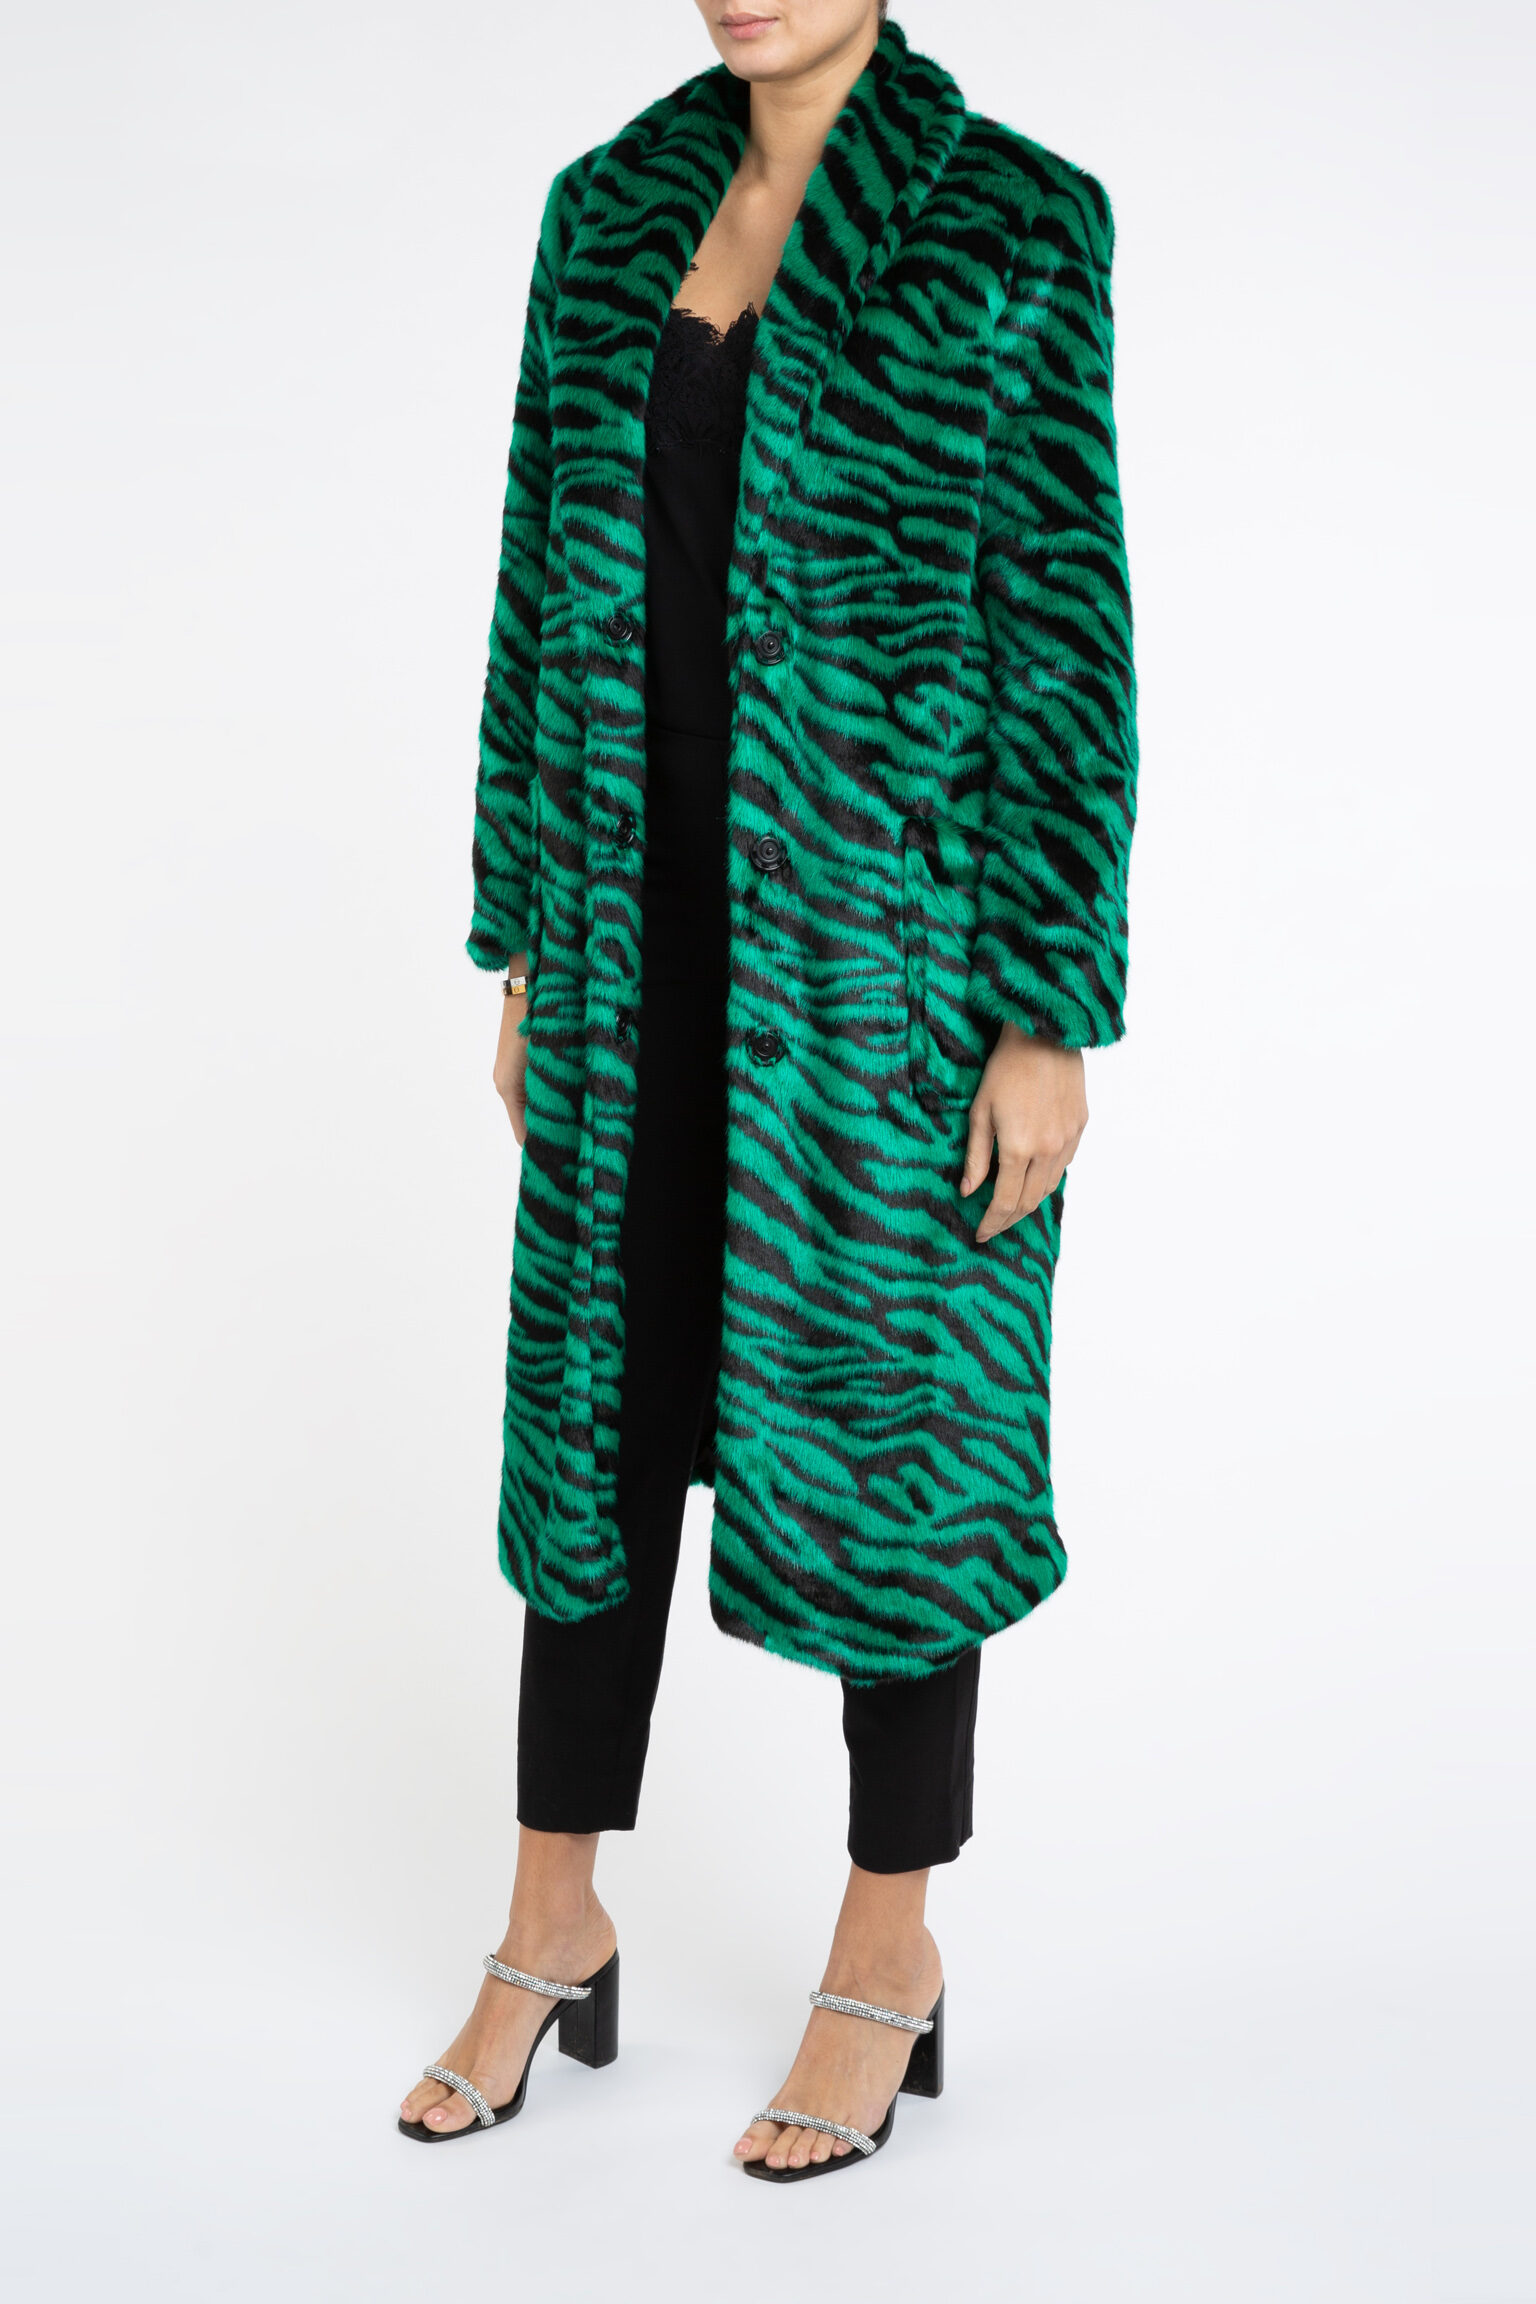 Limited Edition Esmeralda Faux Fur Coat in Green Zebra Print